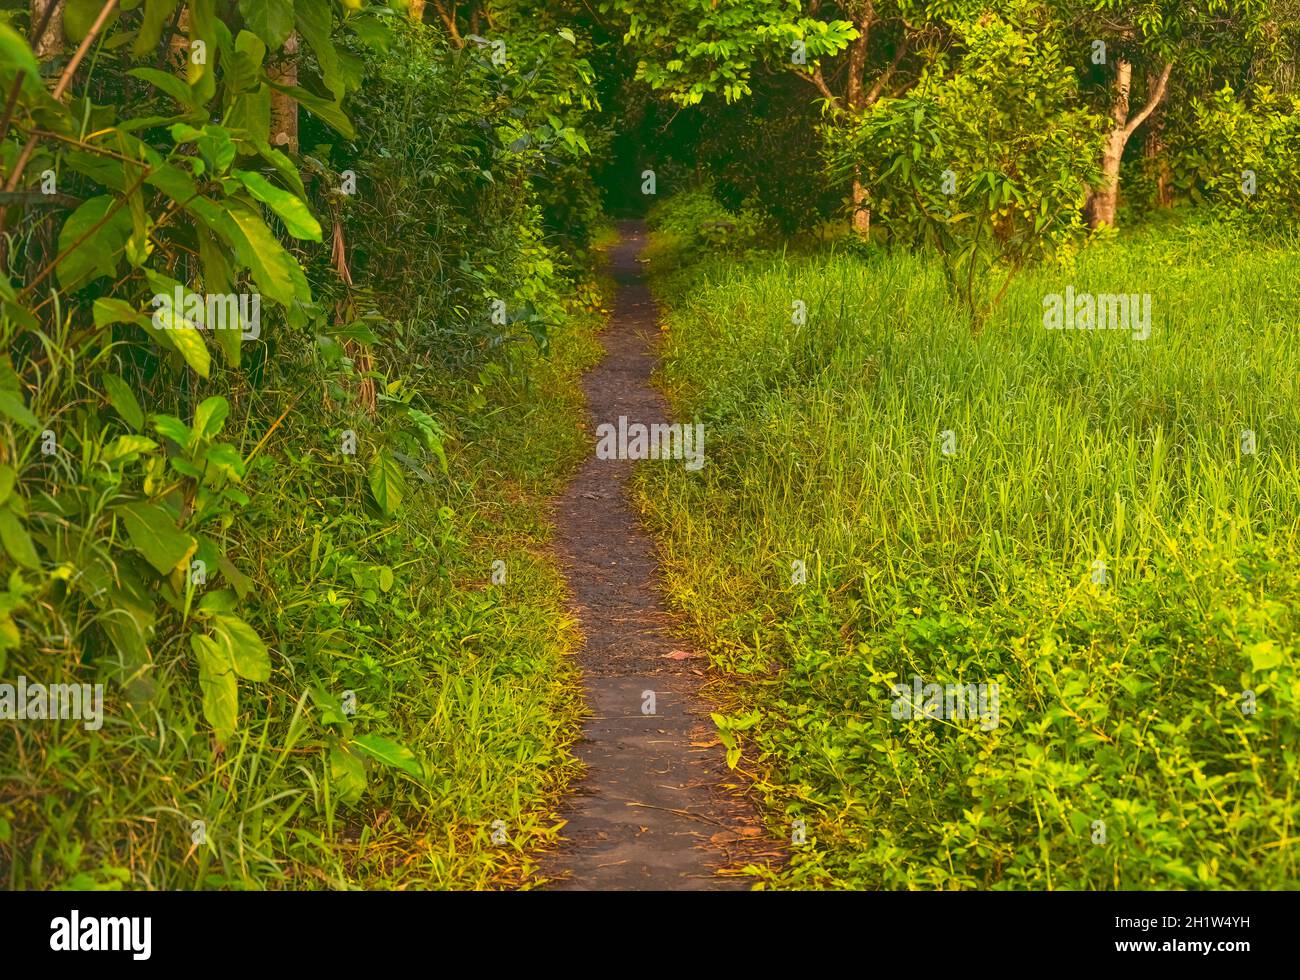 Walking,track,Salt lake park,through,greens,clean,environment,Pollution,free,Kolkata,India. Stock Photo